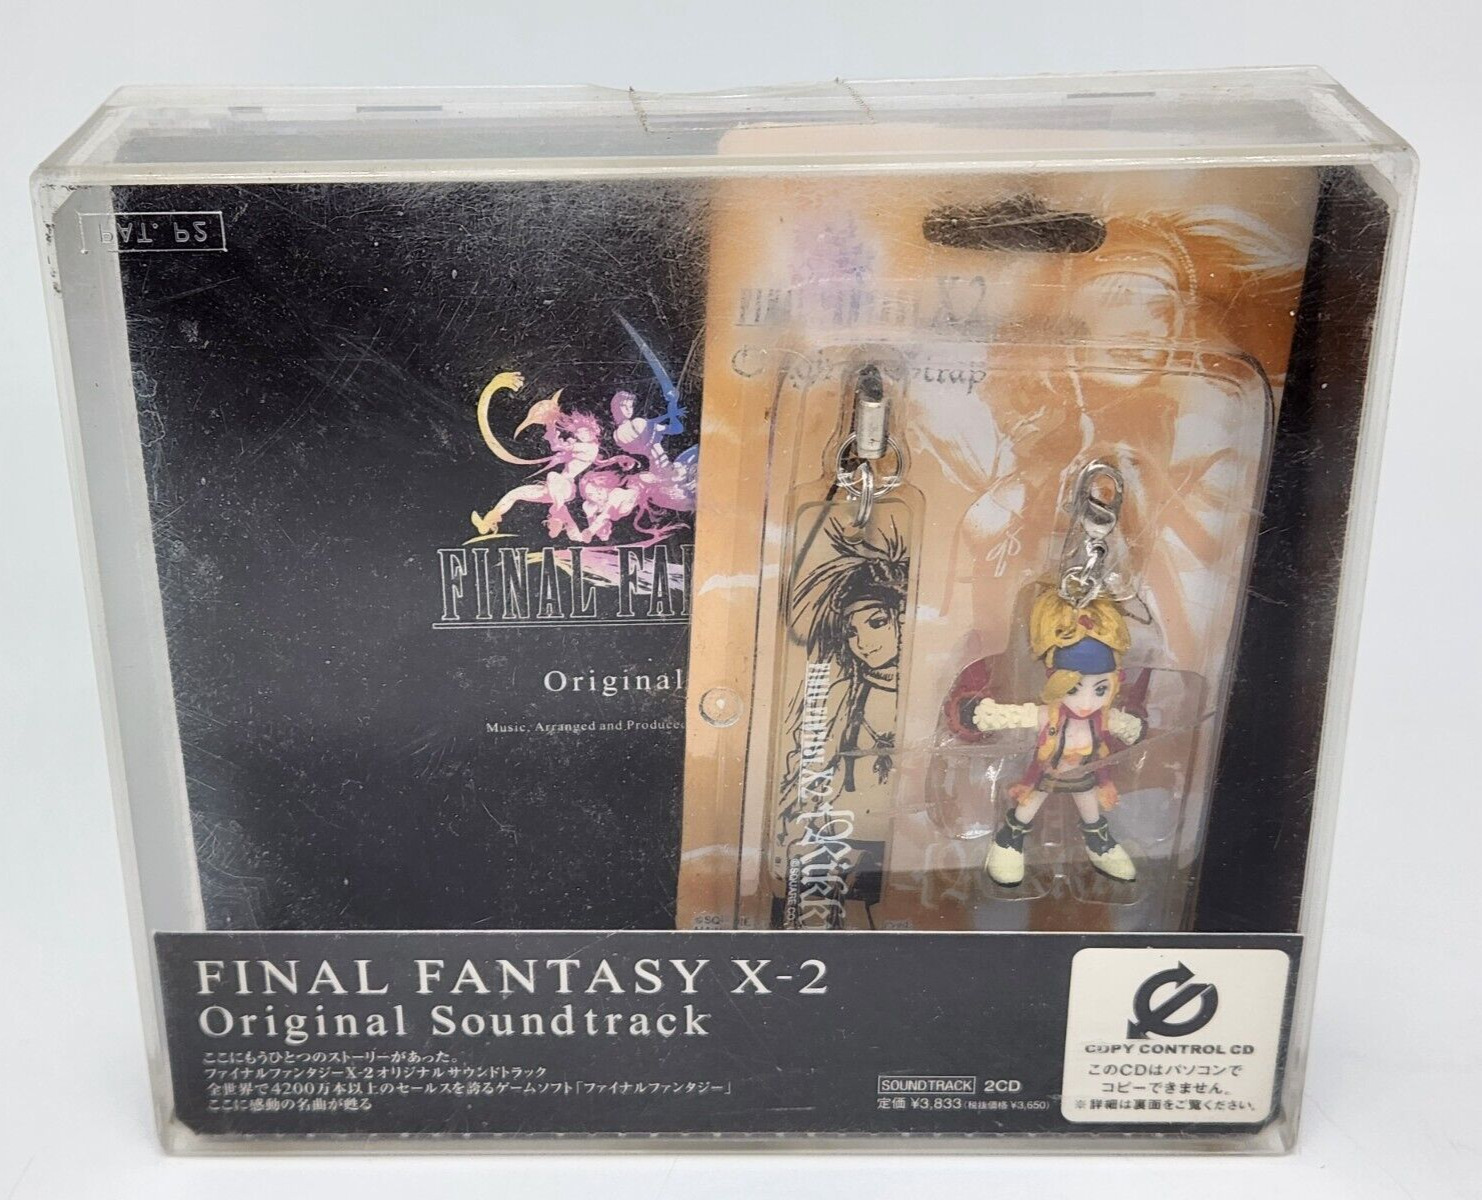 NEW Final Fantasy X-2 Original Soundtrack CD Album X2 Limited Edition Bag Straps